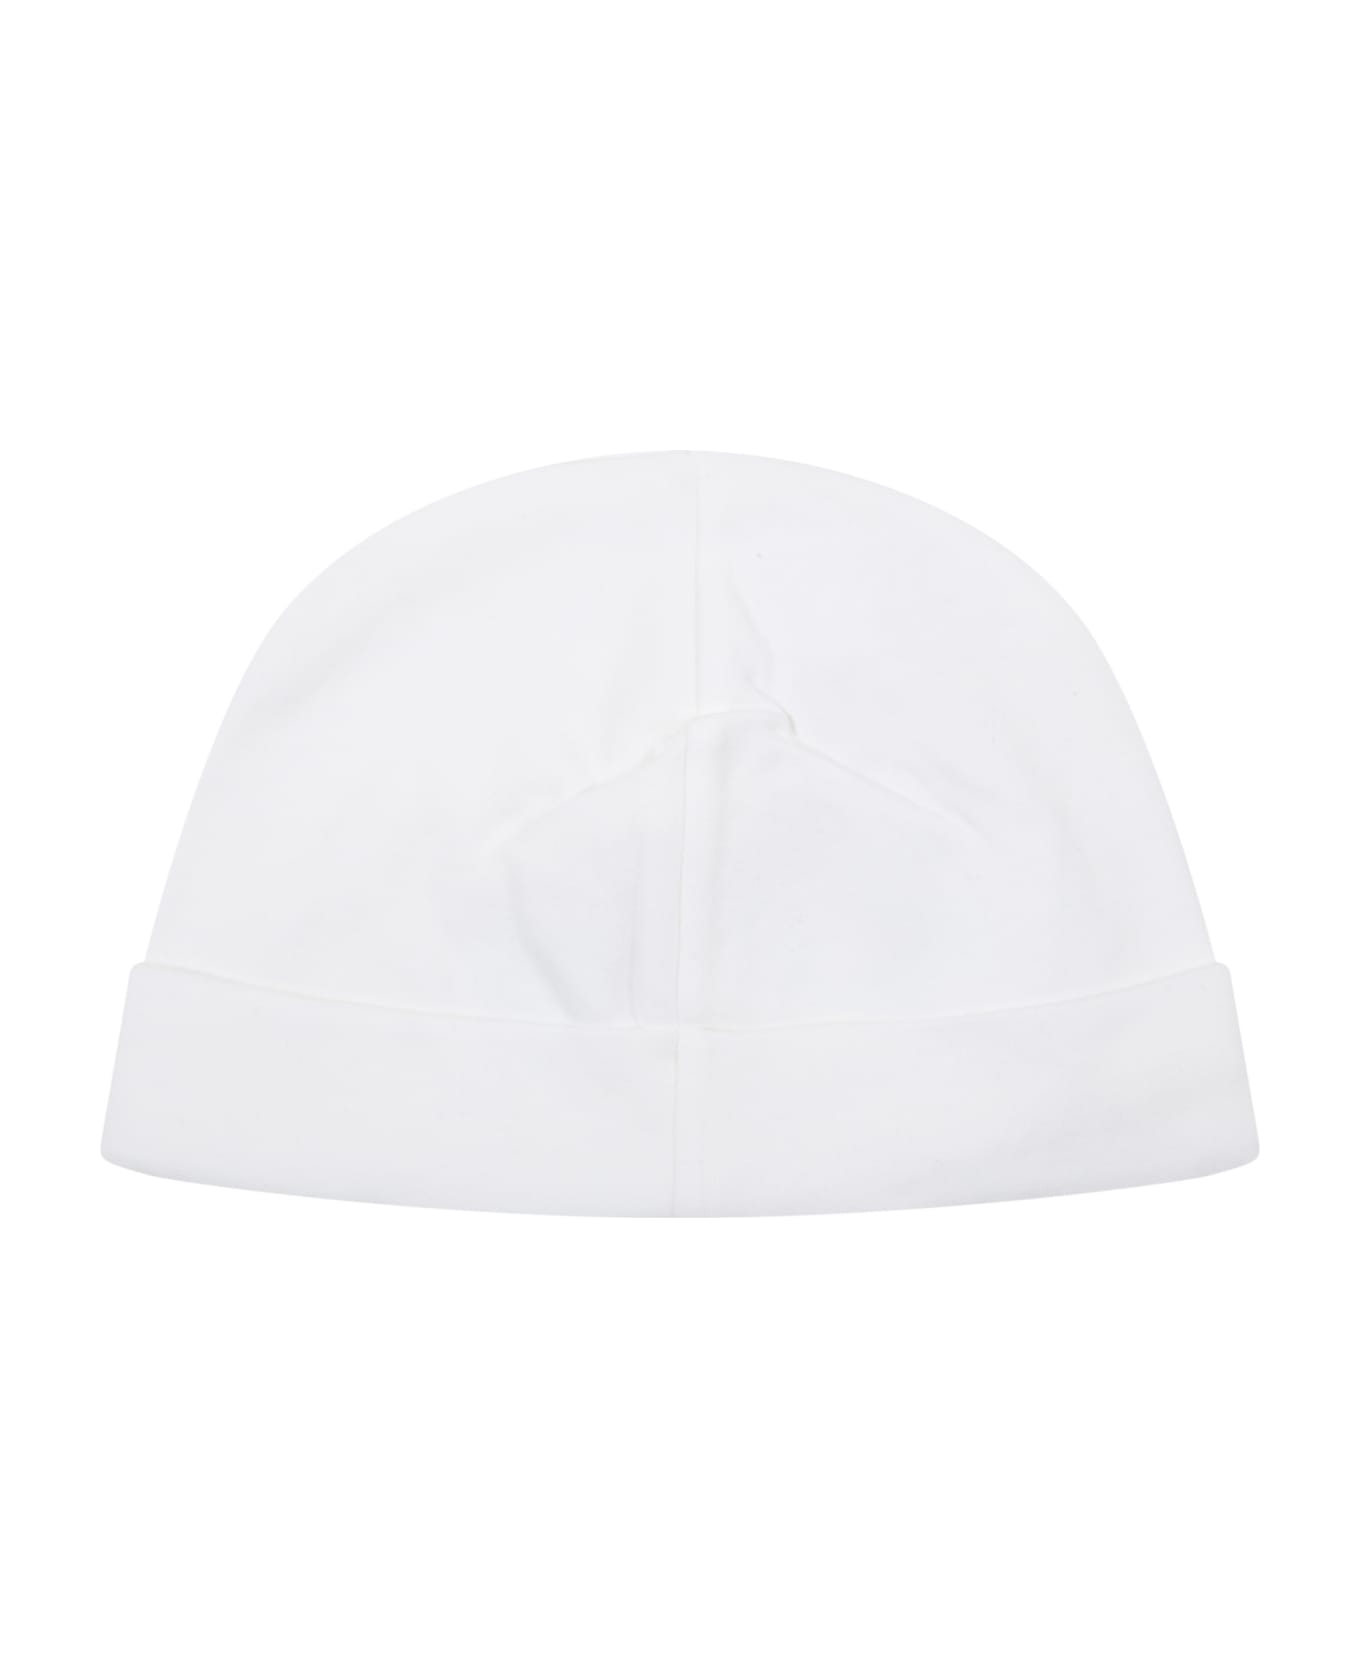 Ralph Lauren White Hat For Baby Kids - White